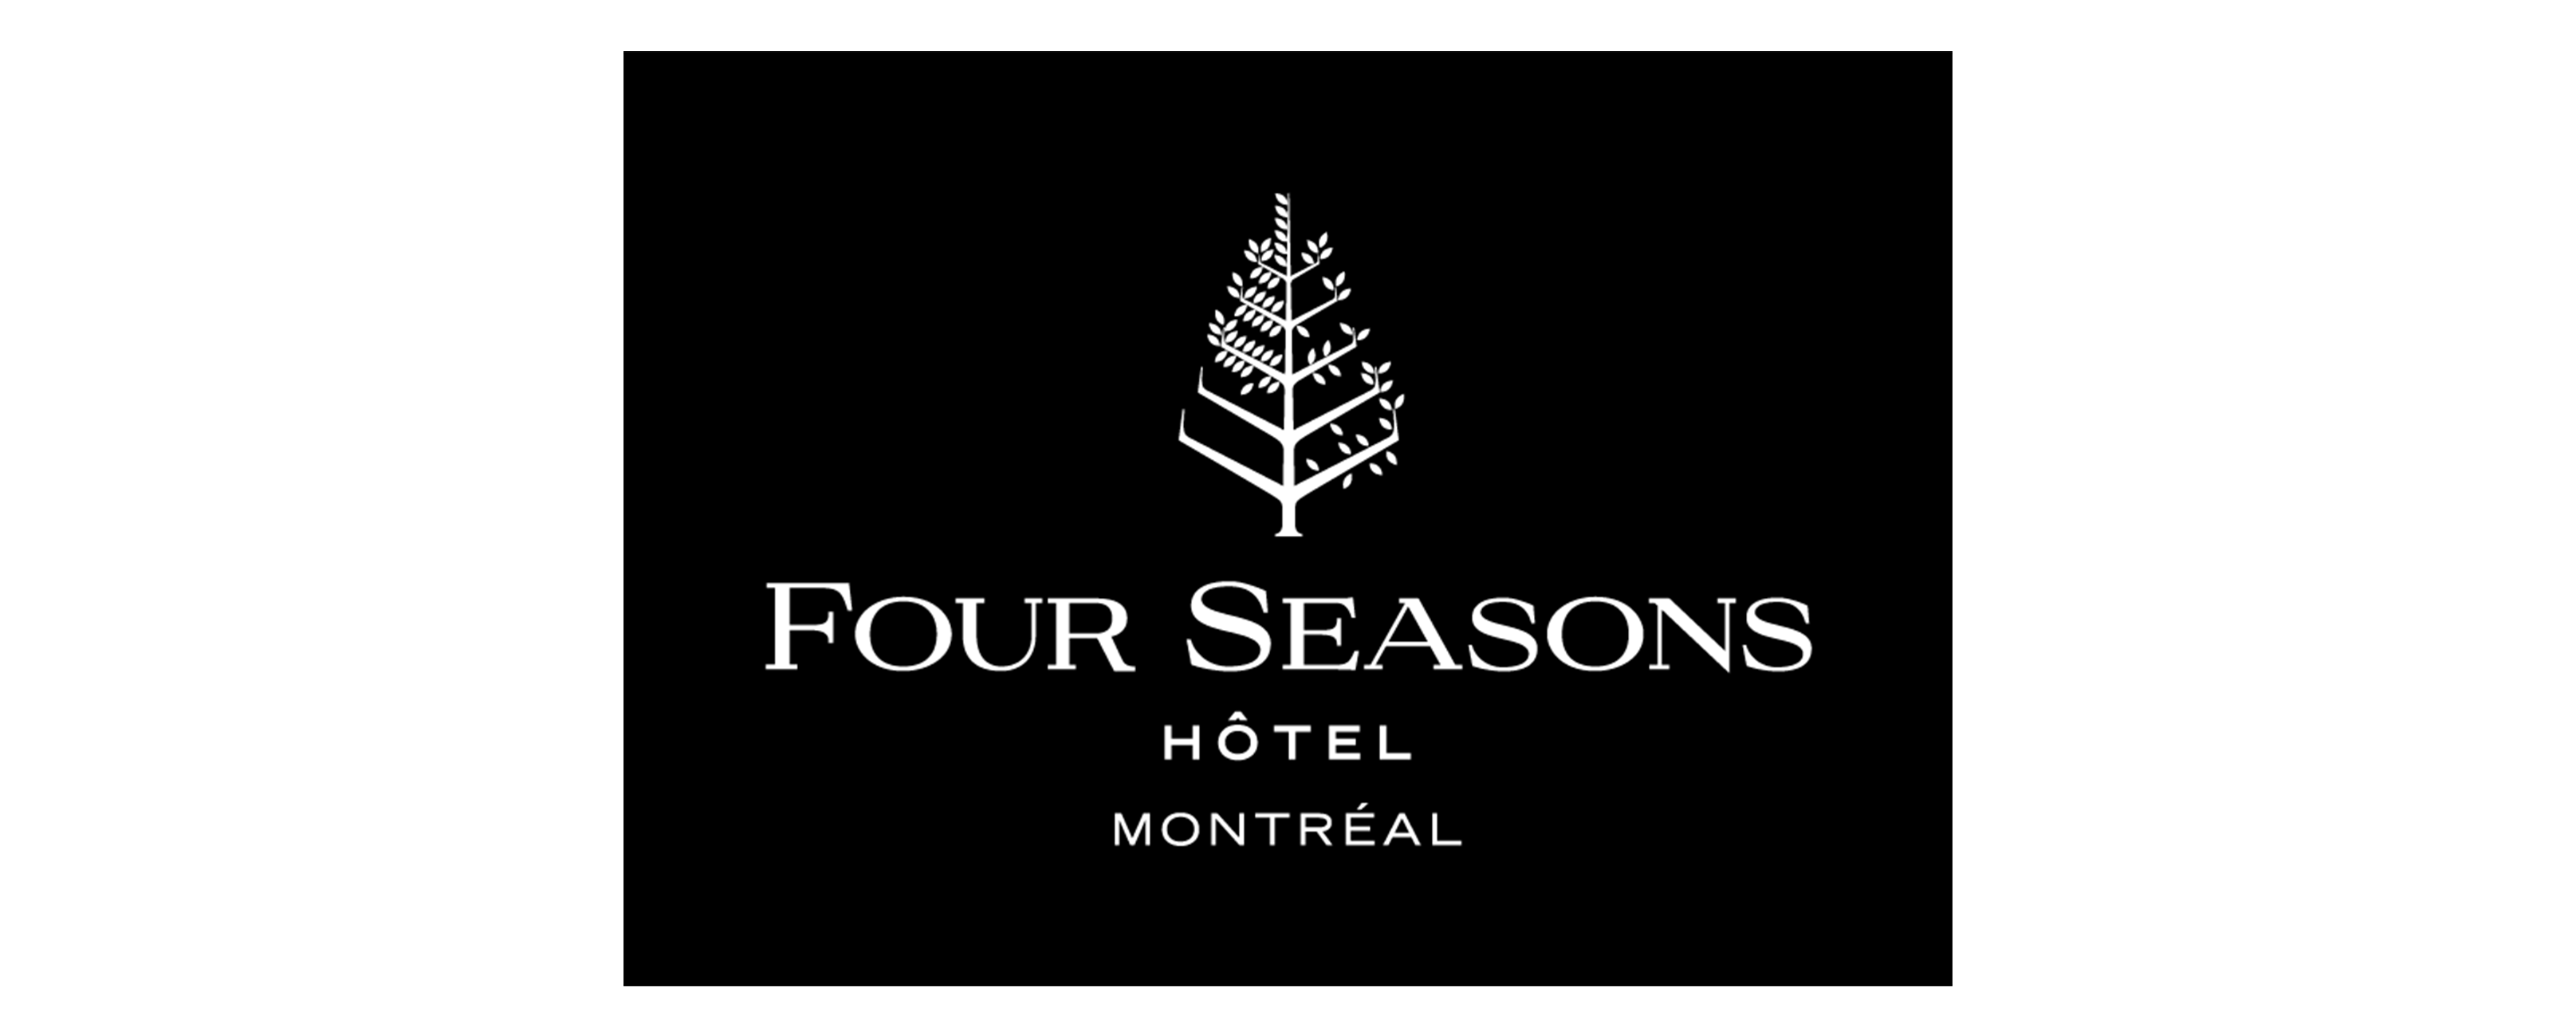  Four Seasons Hotel Montreal